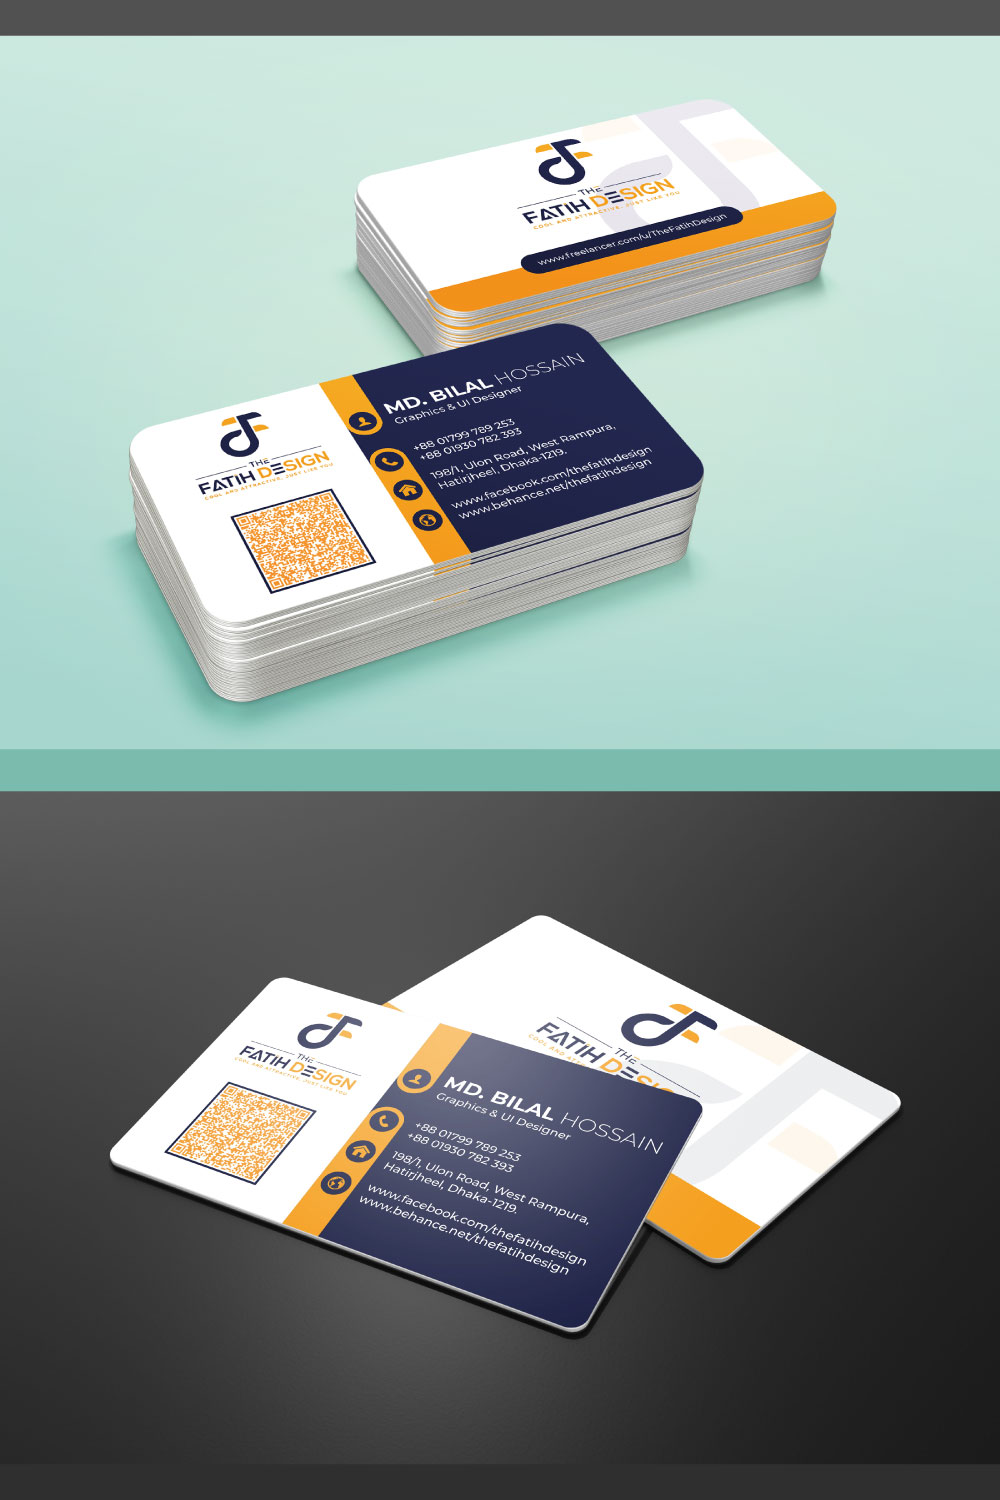 Creative Professional and Elegant Business Card Design pinterest image.